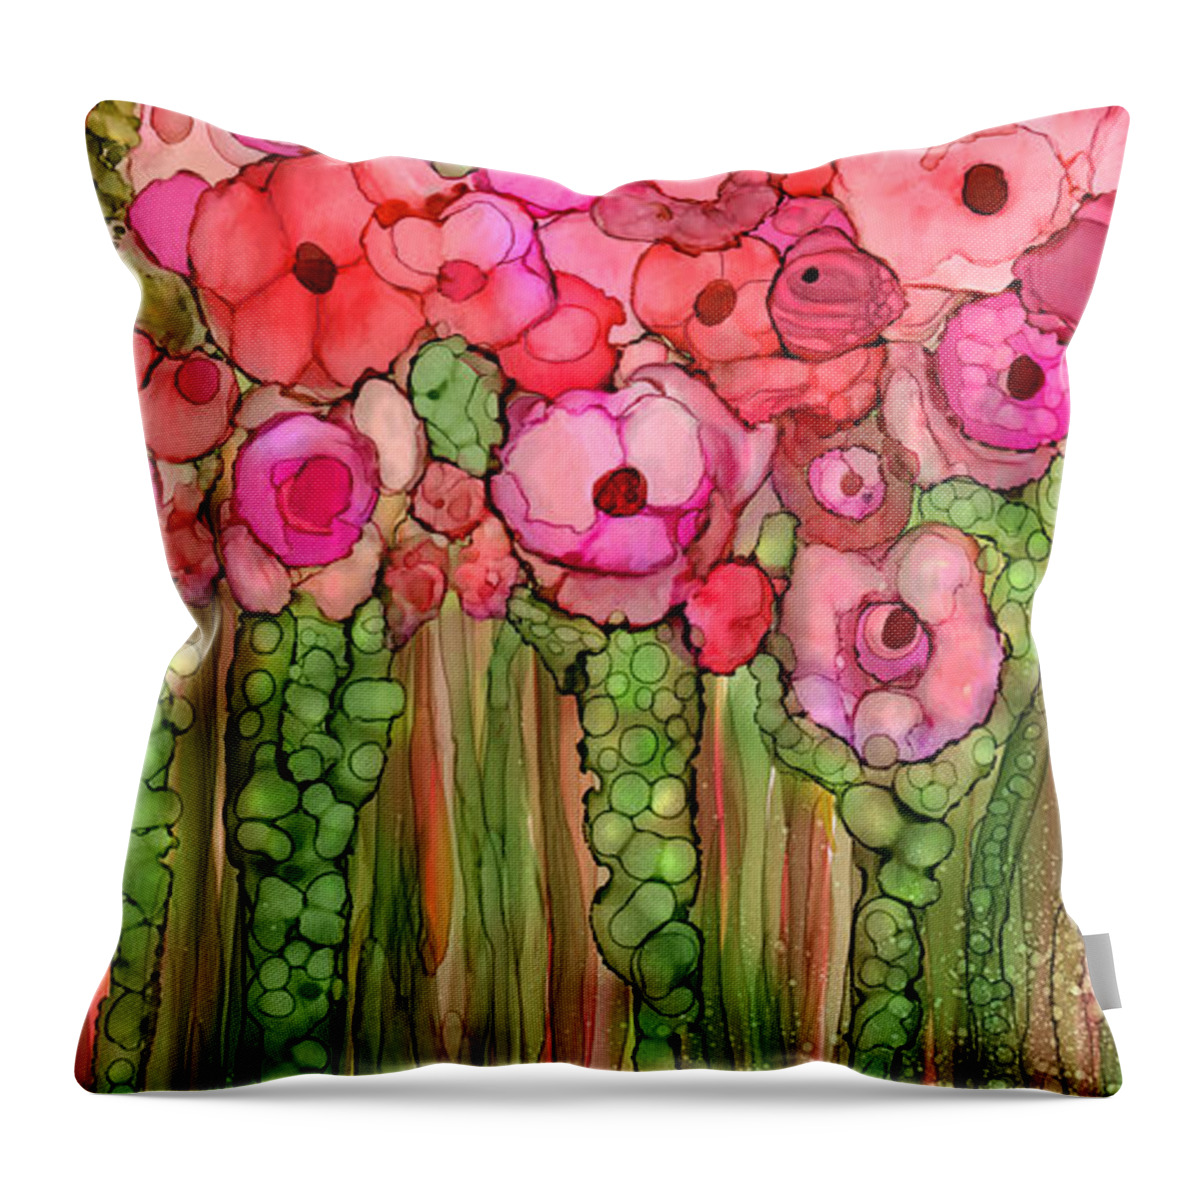 Carol Cavalaris Throw Pillow featuring the mixed media Wild Poppy Garden - Pink by Carol Cavalaris